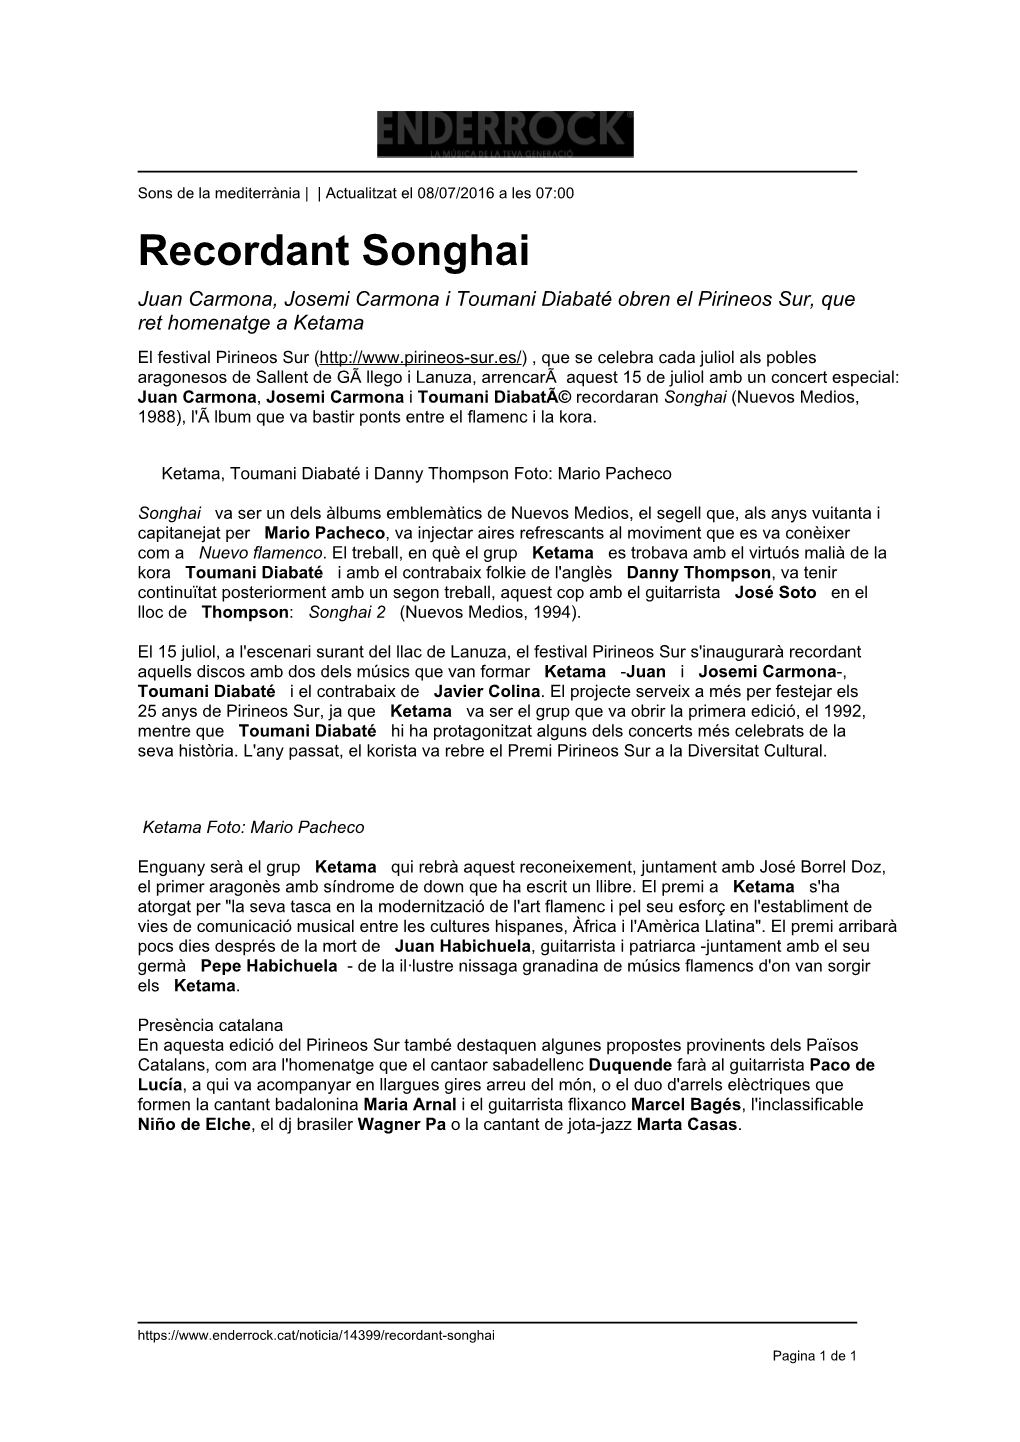 Recordant Songhai